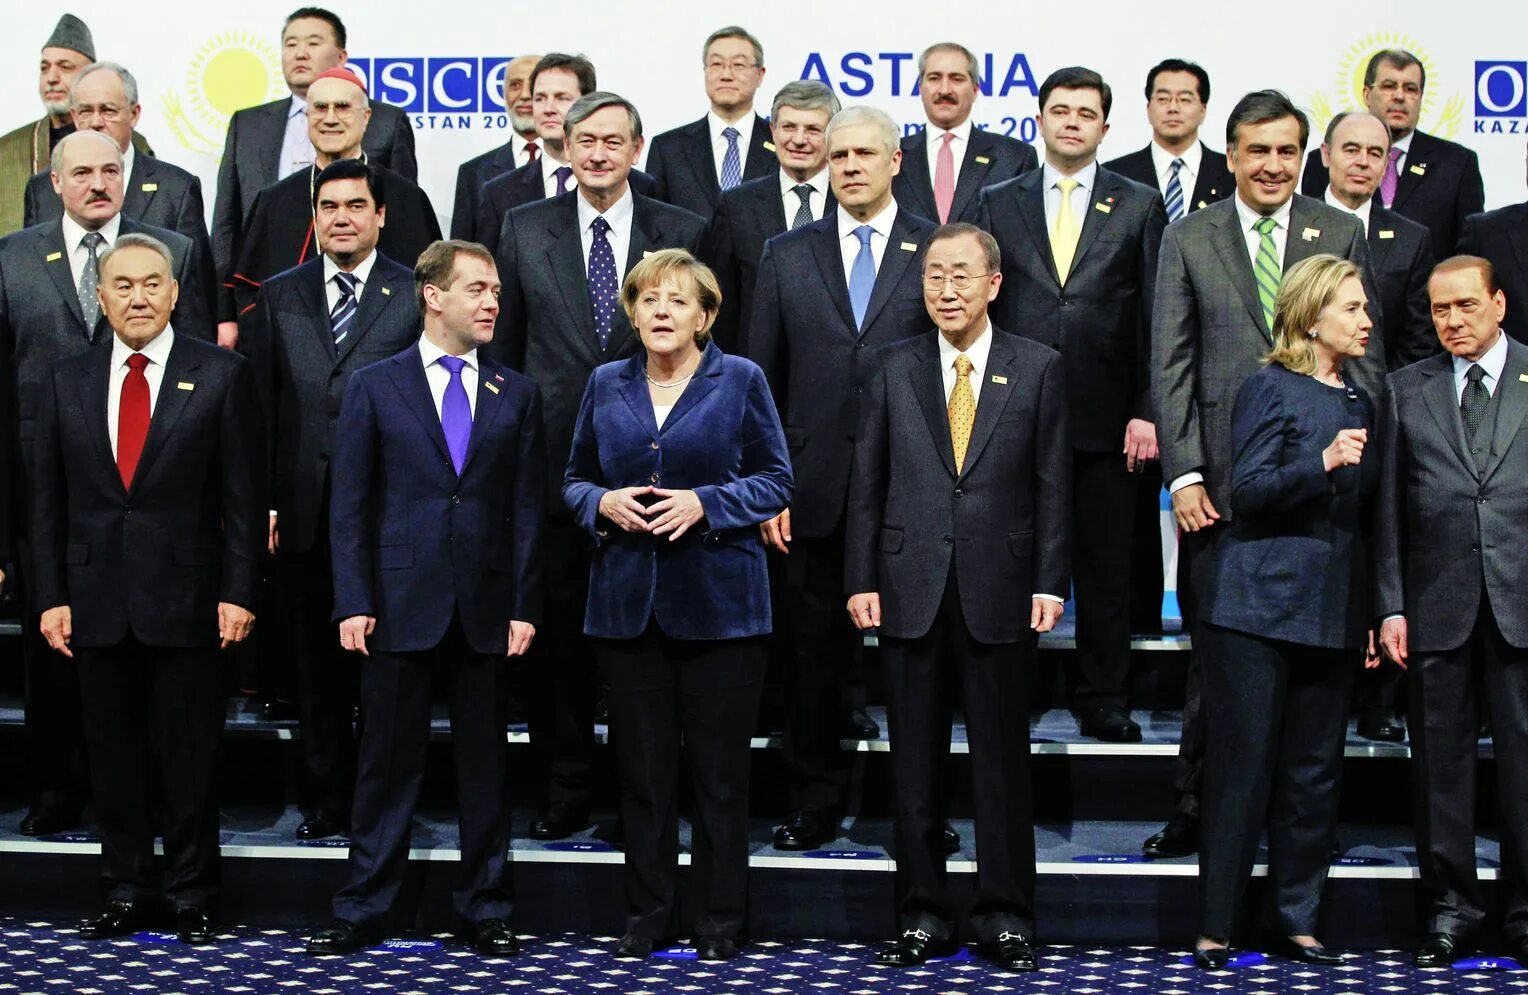 Новости бизнеса политики. Саммит ОБСЕ Астана 2010. Саммит ОБСЕ В Астане. Саммит 1999.